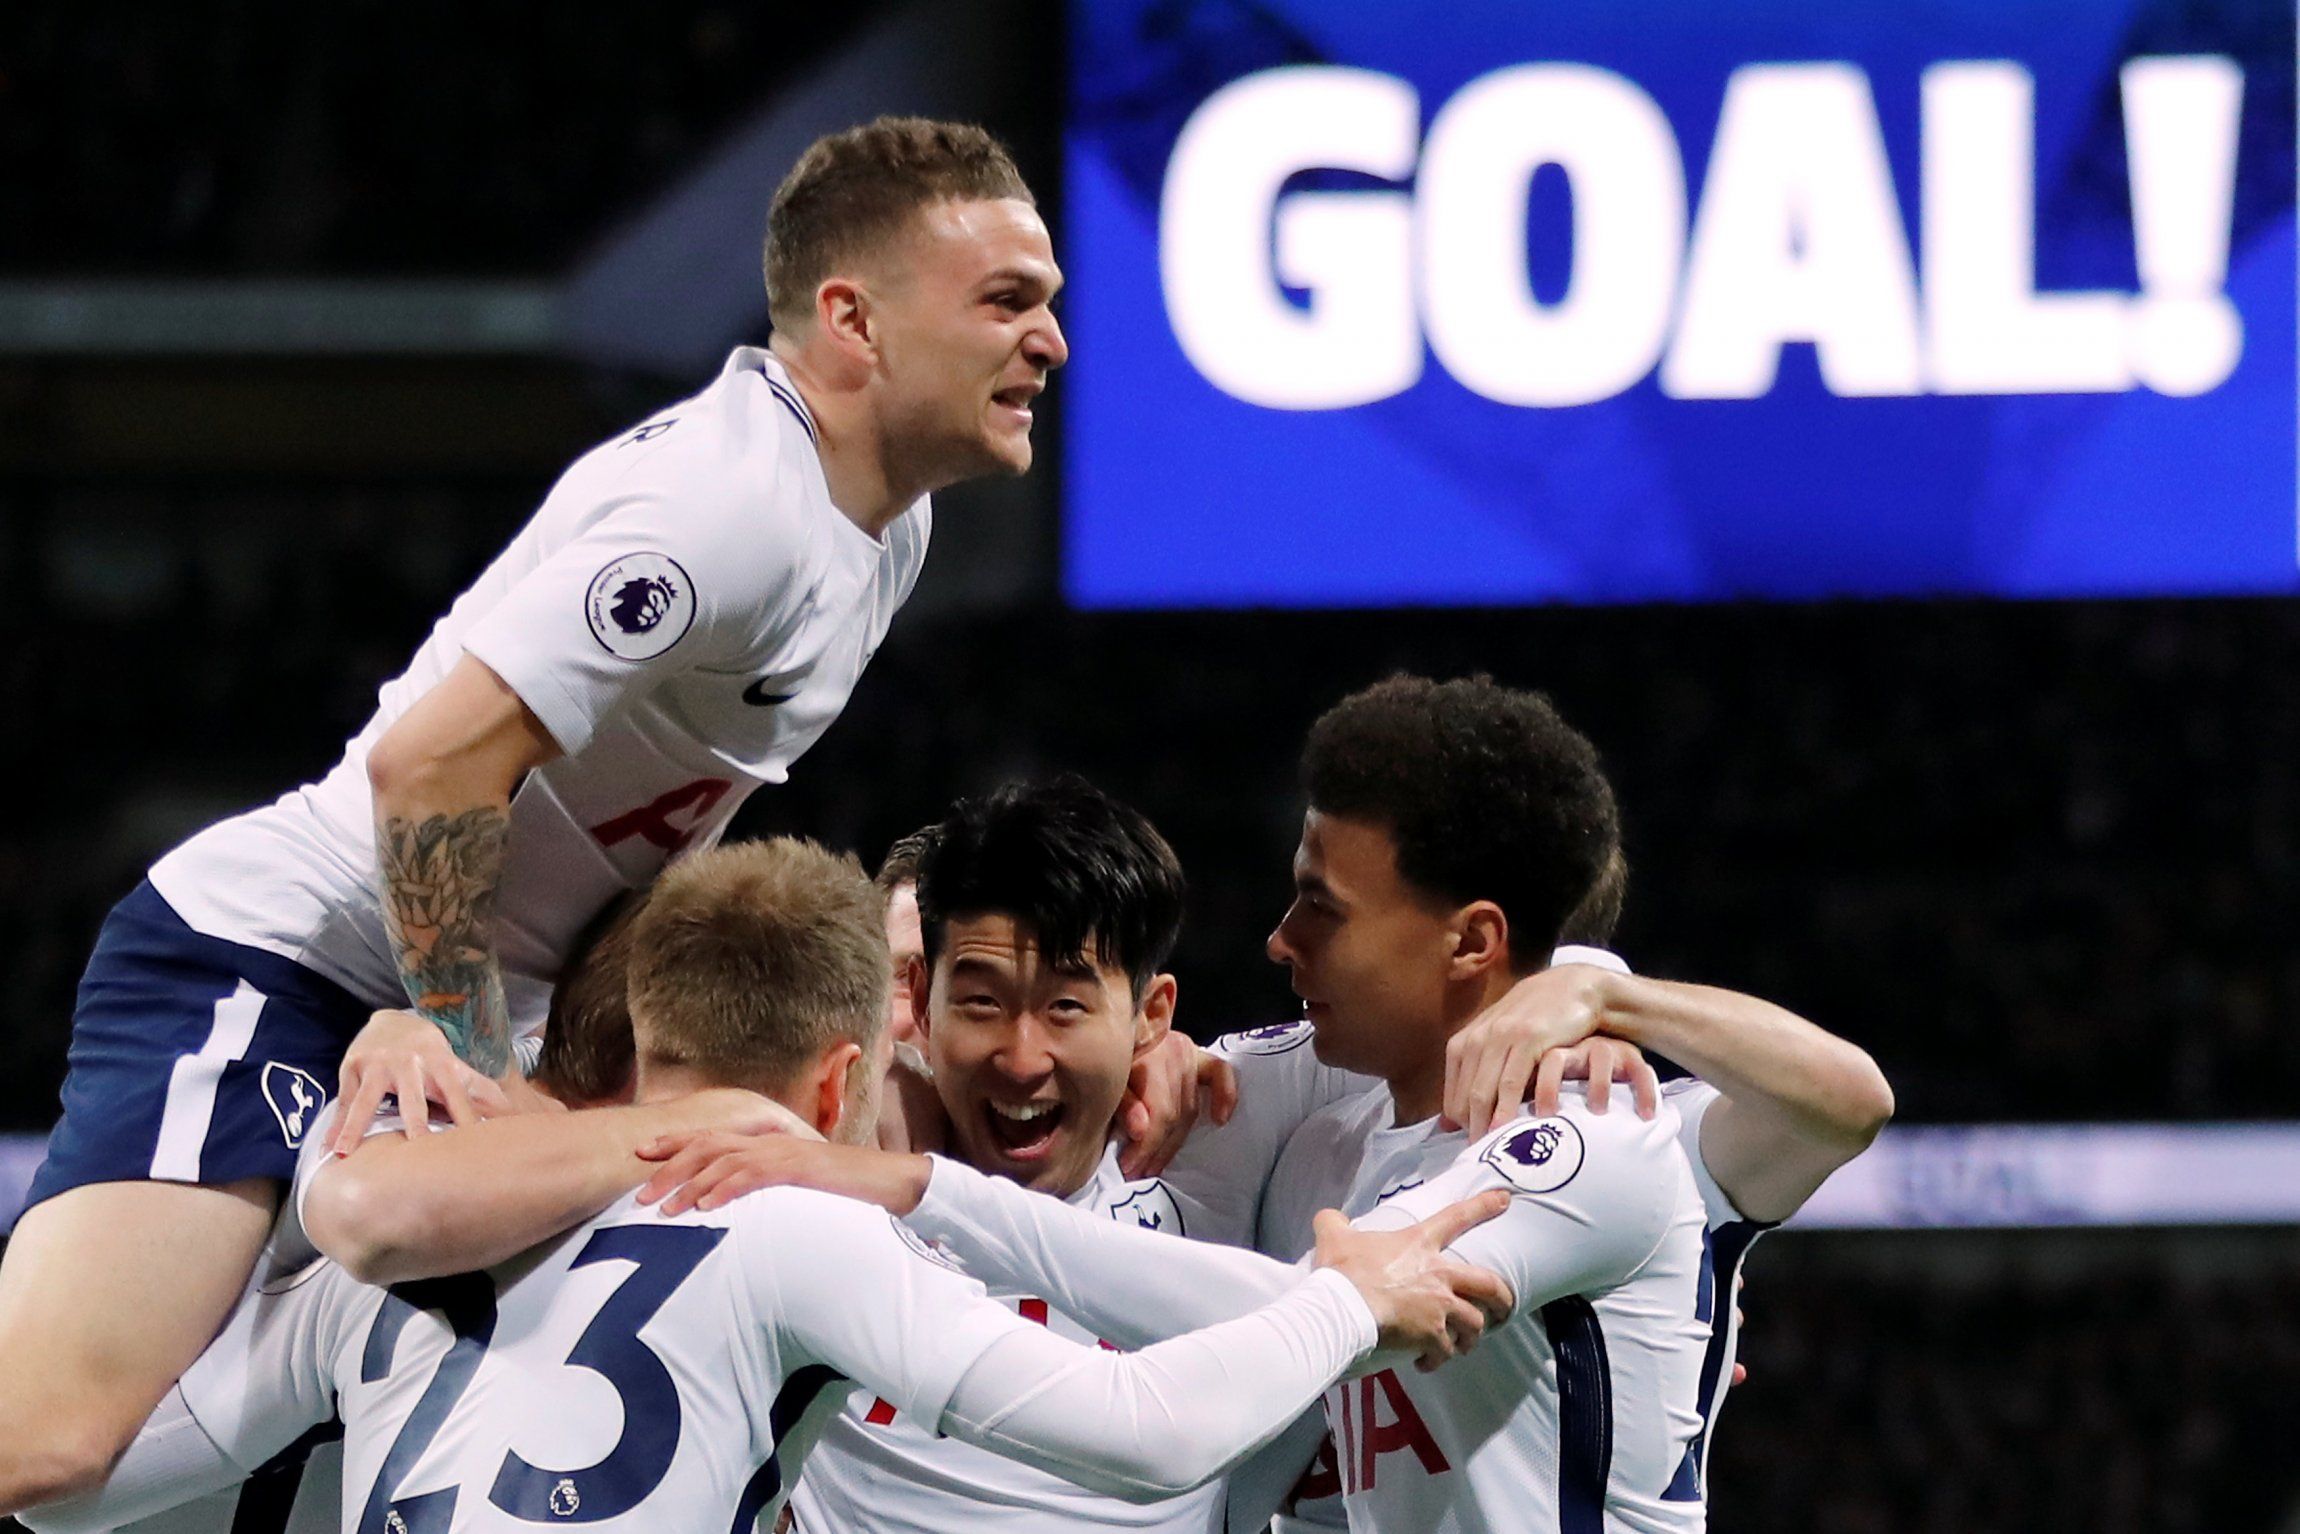 Tottenham celebrate scoring in the first minute against Manchester United